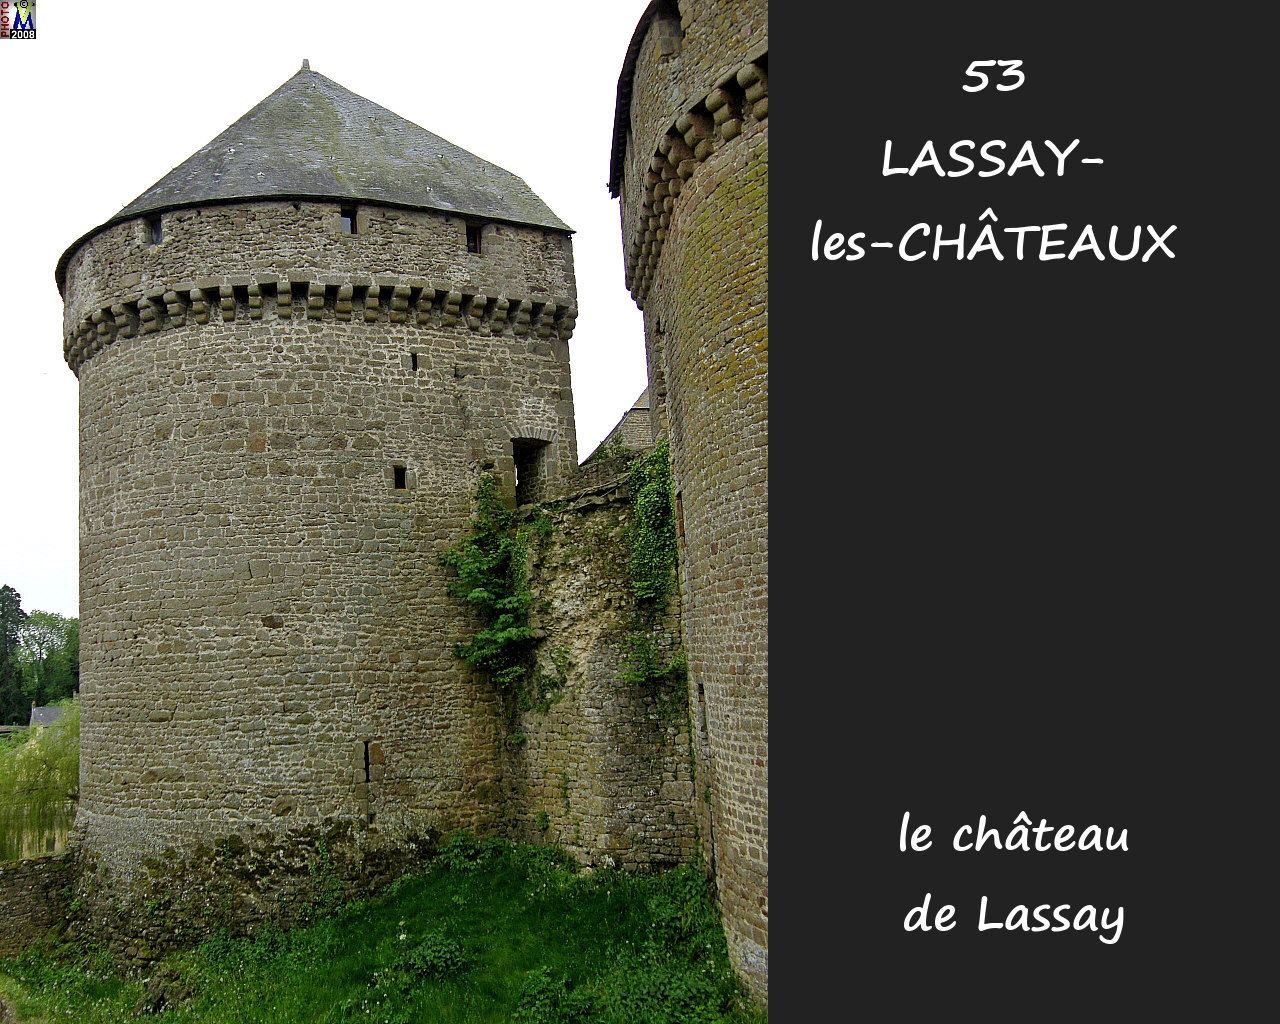 53LASSAY-CHATEAUX_chateauL_122.jpg